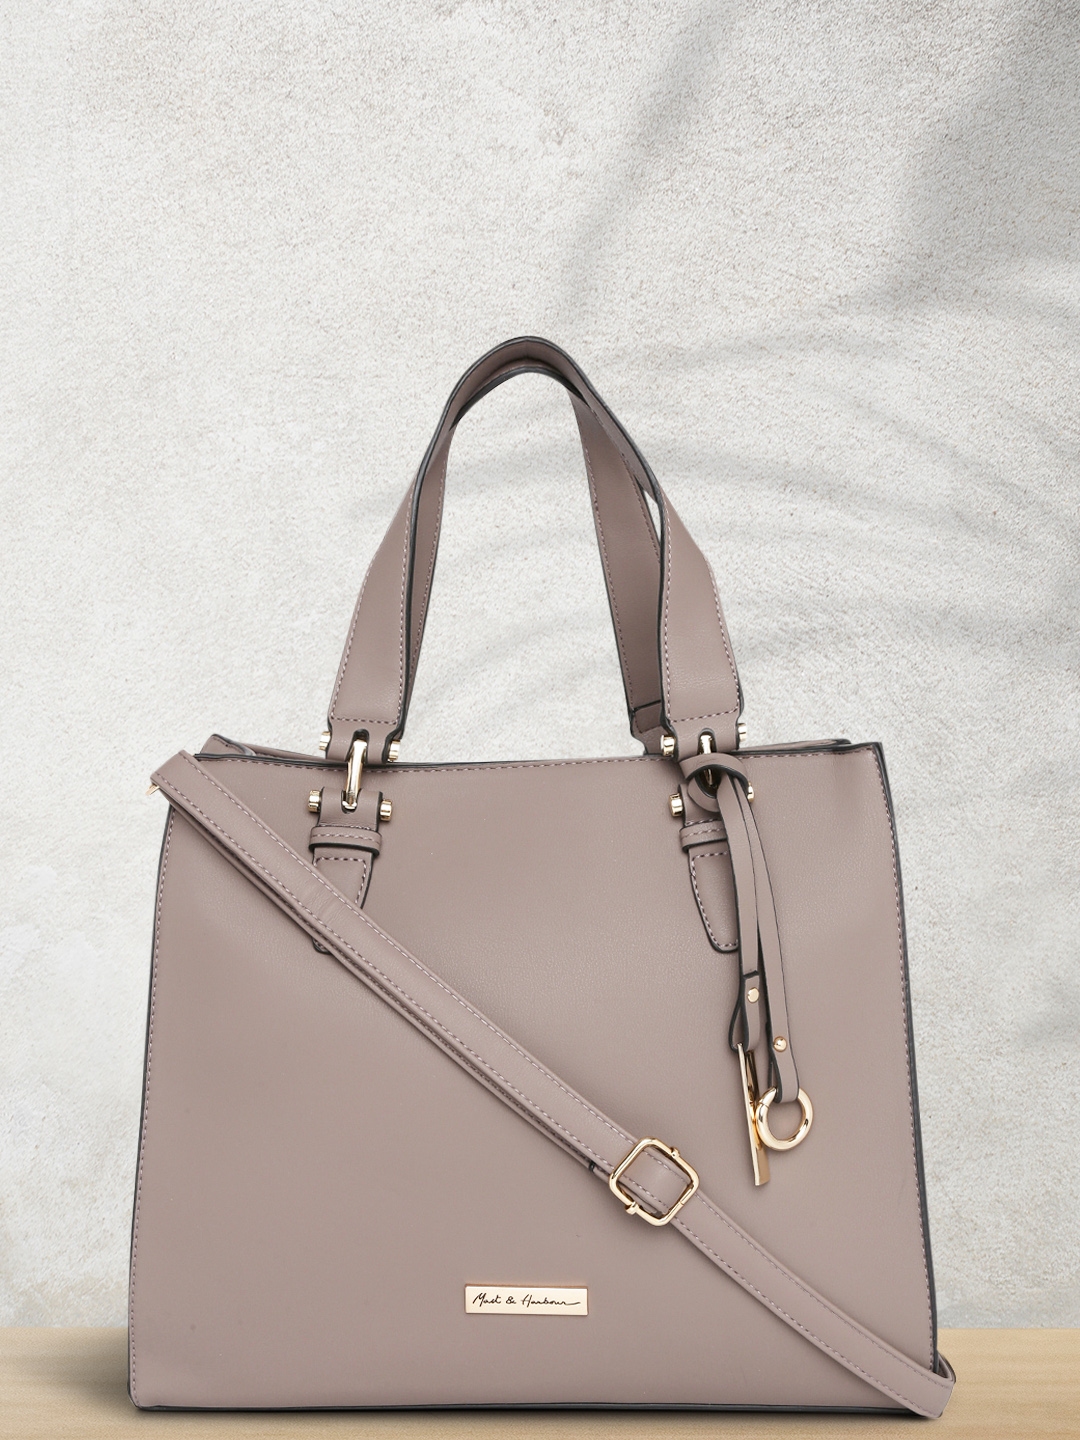 Buy Mast & Harbour Brown Tote Bag - Handbags for Women 1629740 | Myntra